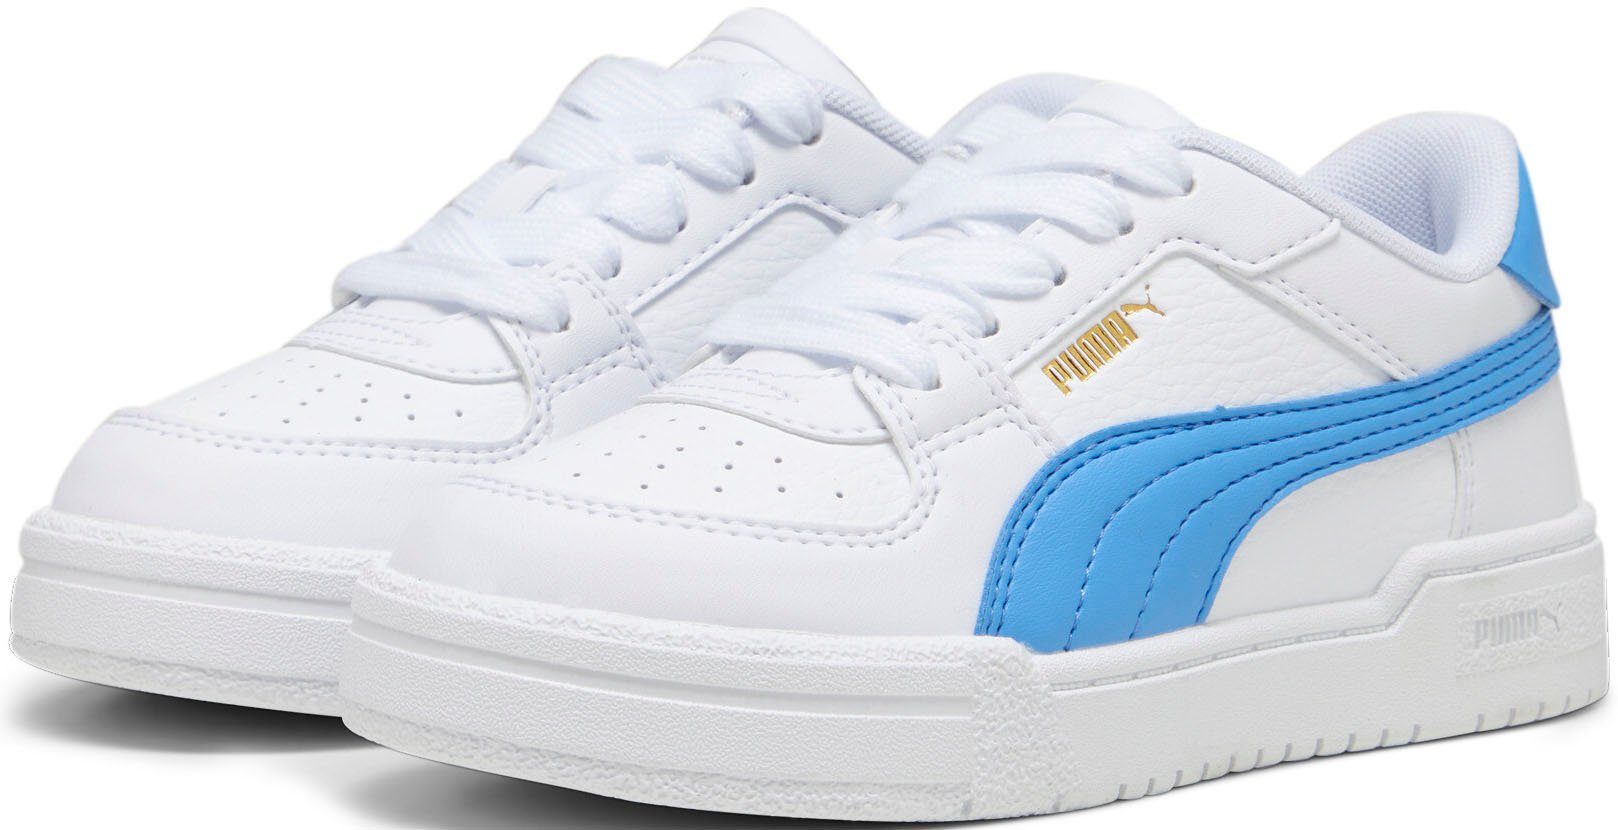 Extrem günstige Qualität PUMA CA PRO CLASSIC White-Regal PS Sneaker Blue PUMA